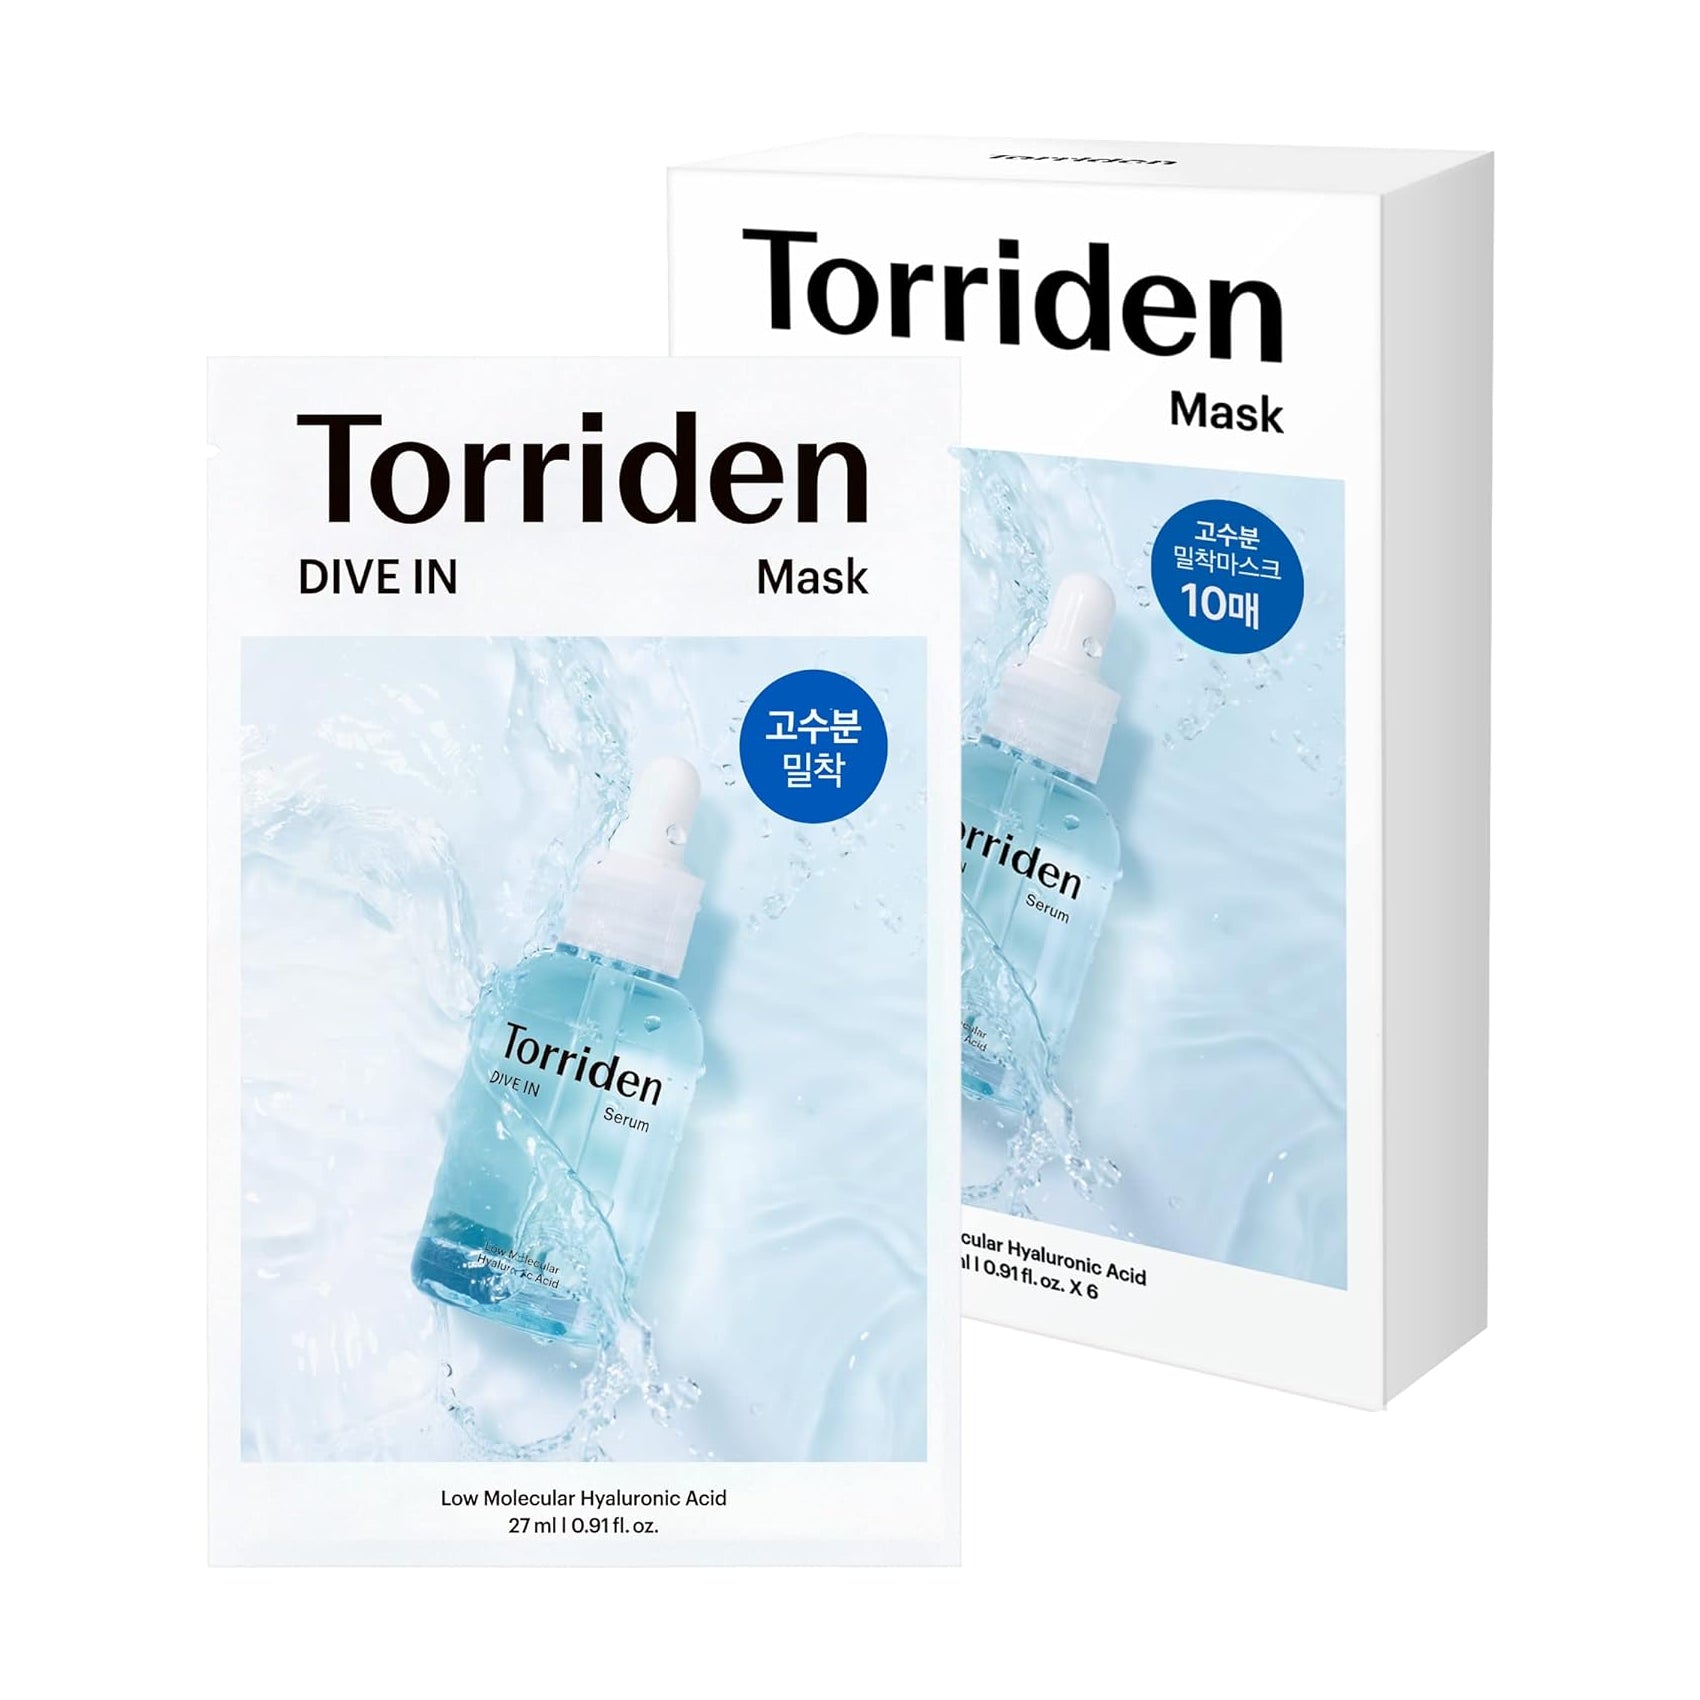 Torriden Dive-in Low Molecule Hyaluronic Acid Mask